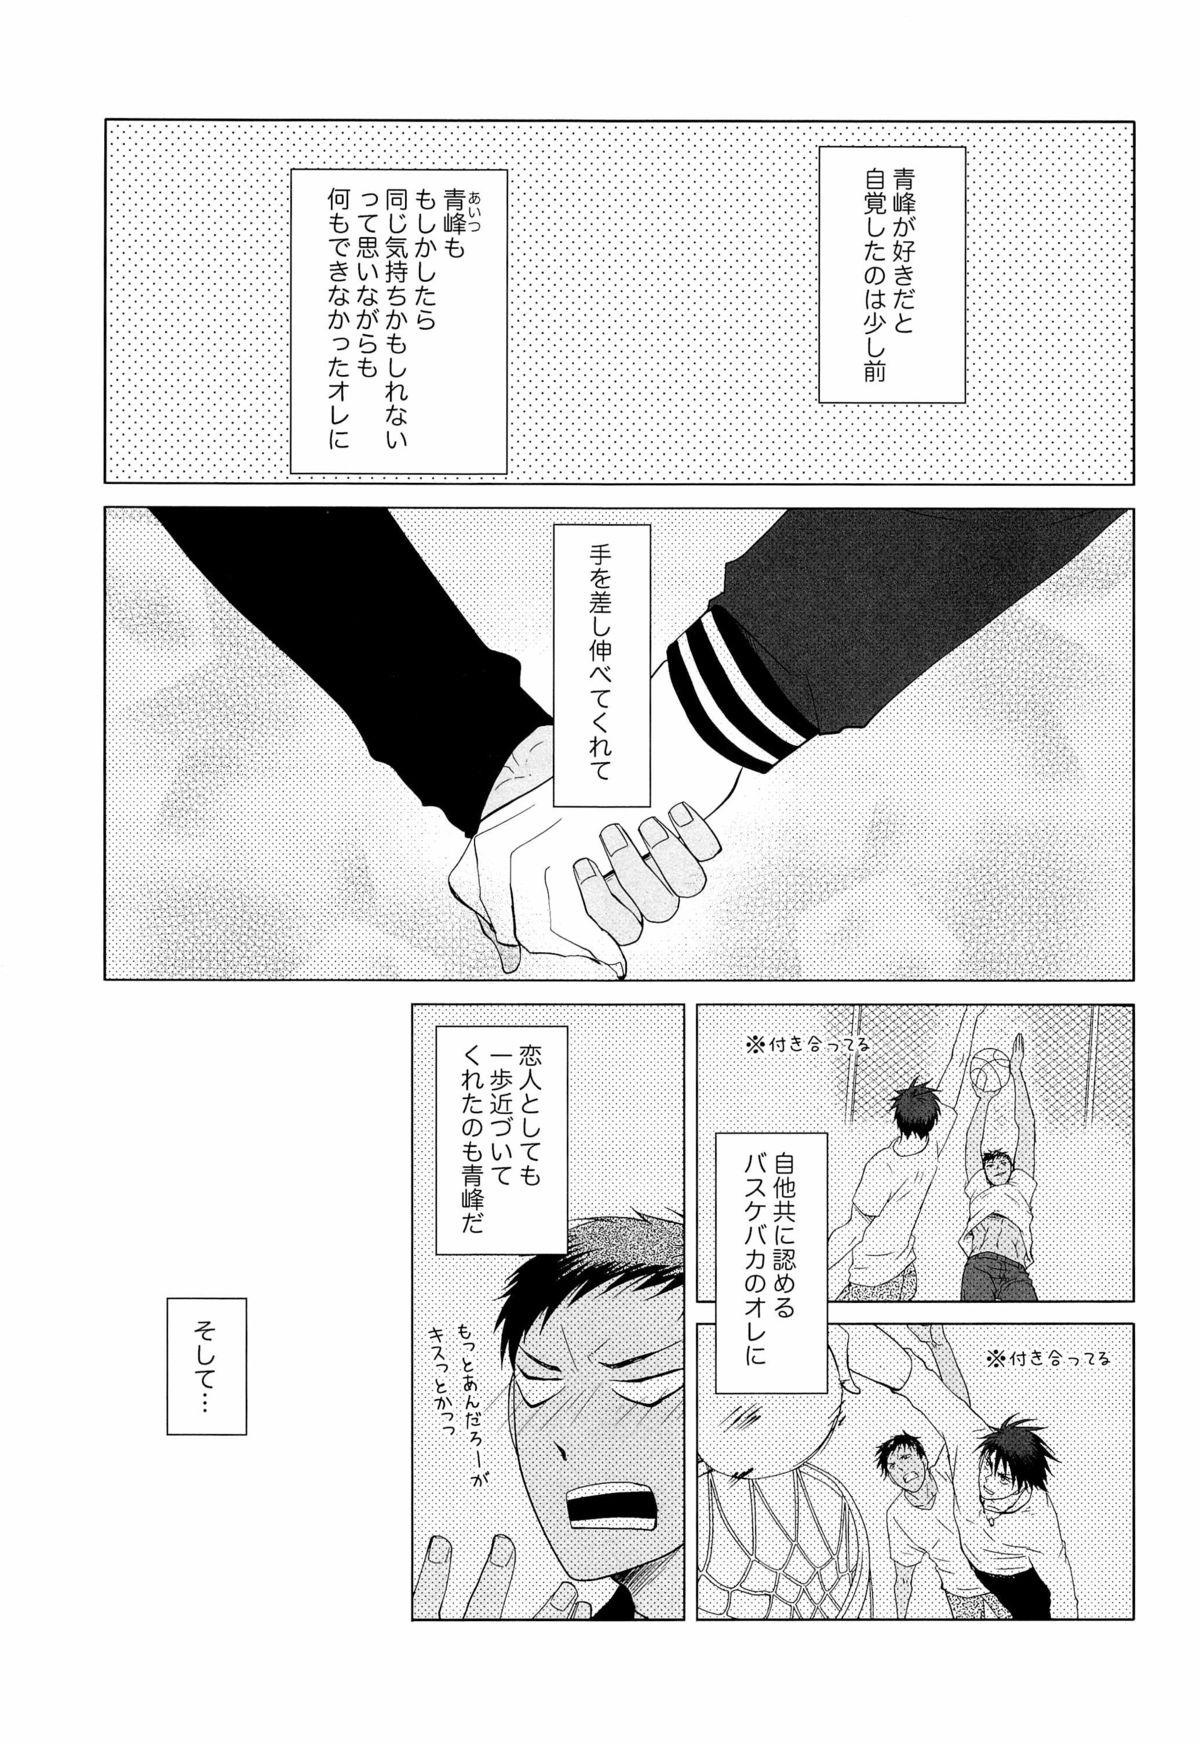 Cdmx あおみねと付き合ってる、ます。 - Kuroko no basuke Analfuck - Page 5